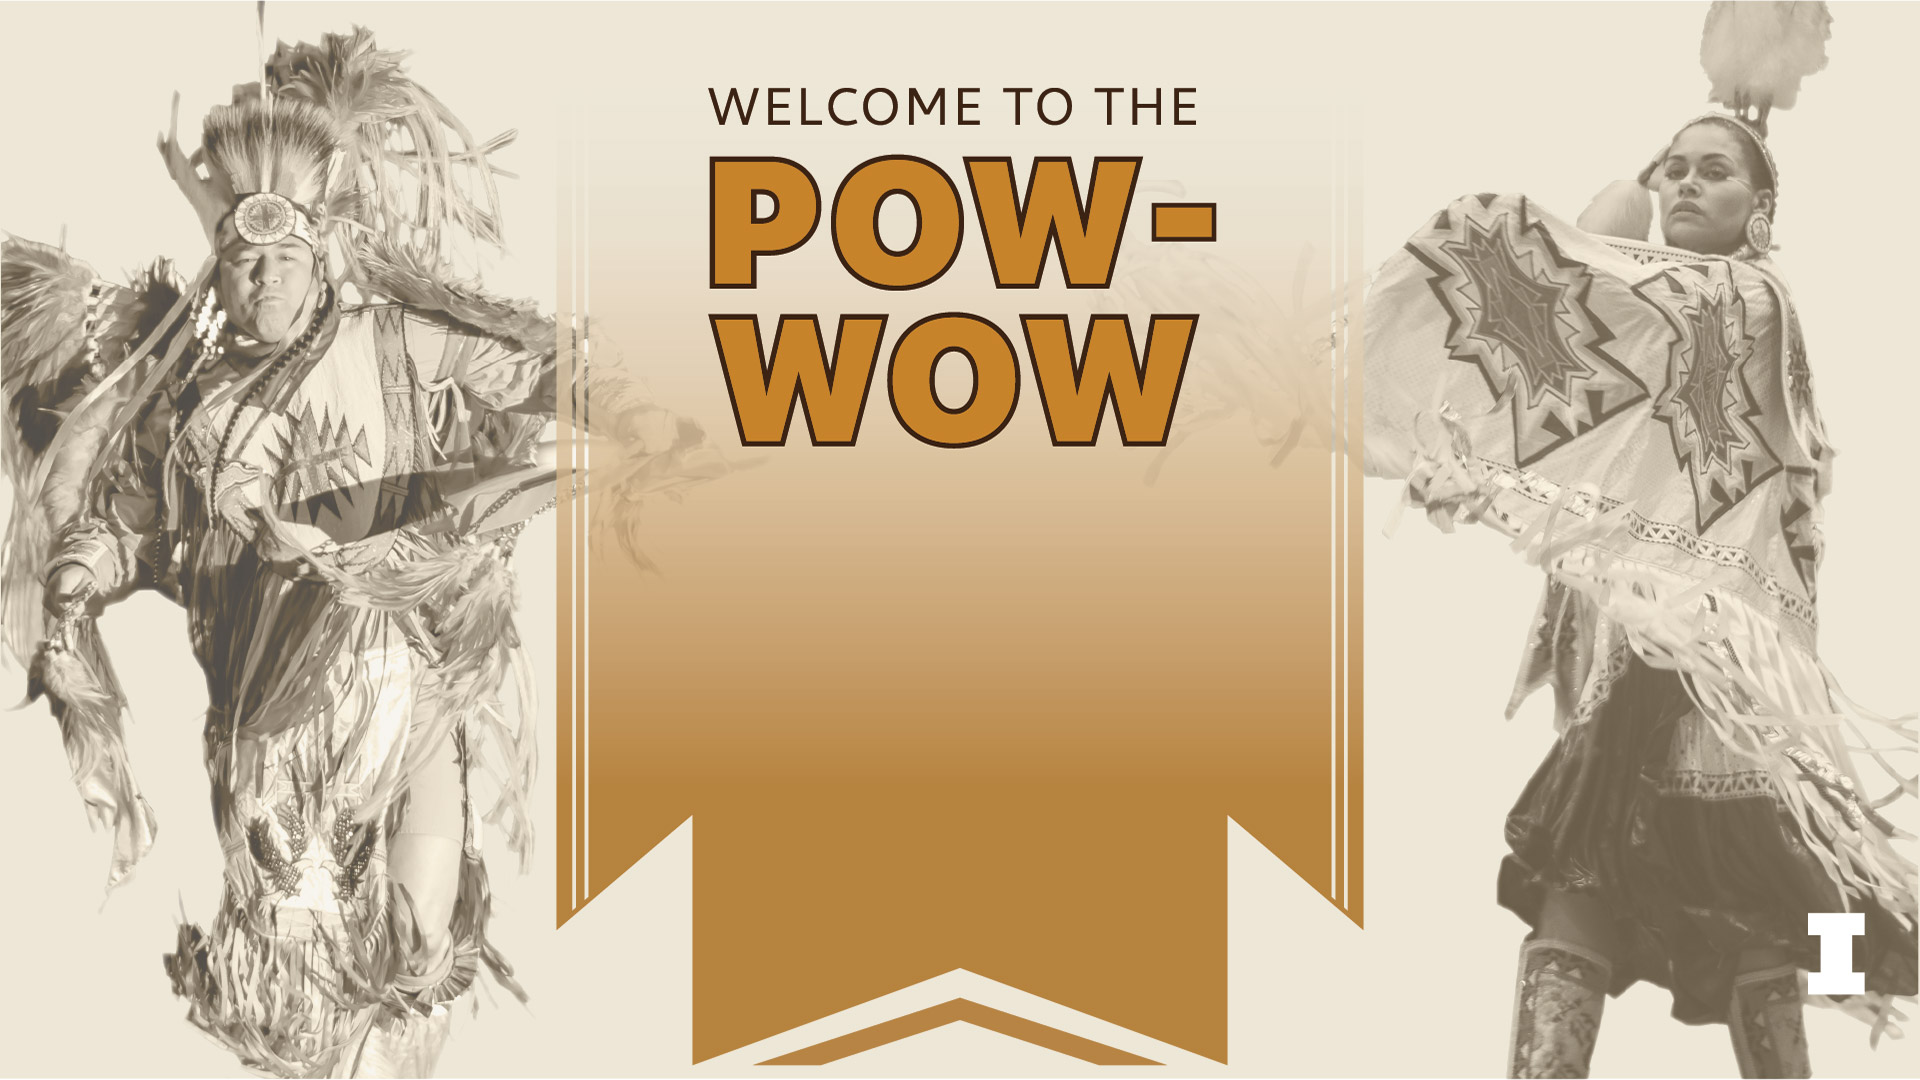 Pow-wow exhibit marketing flyer